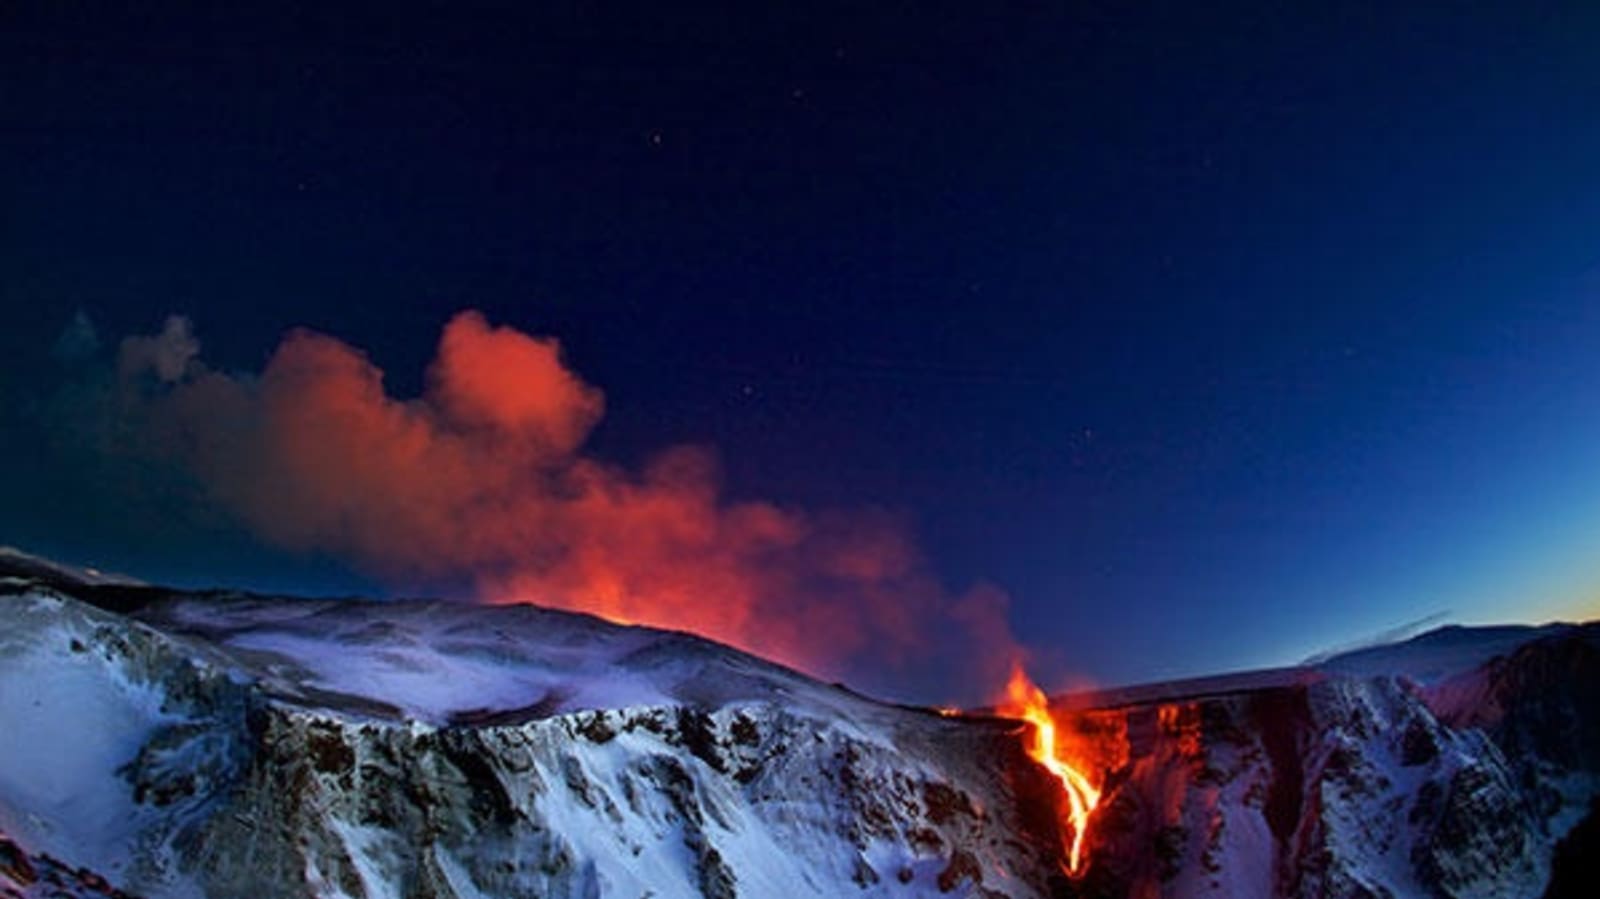  Eyjafjallajokull volcano erupting at night.